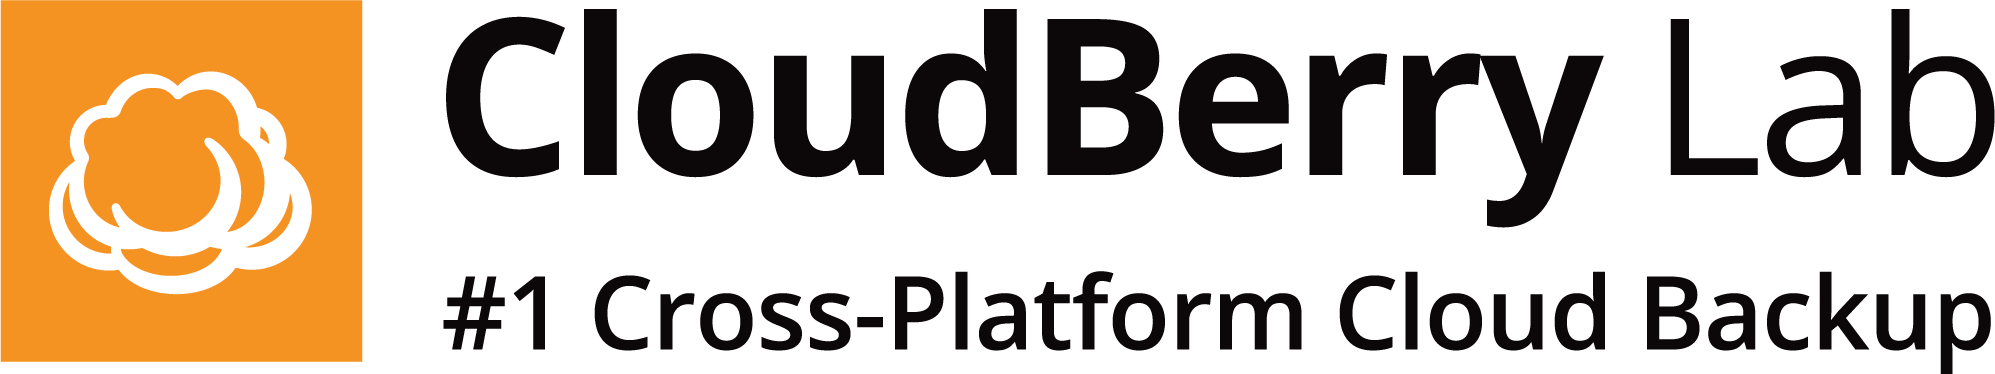 CloudBerry Lab-logo